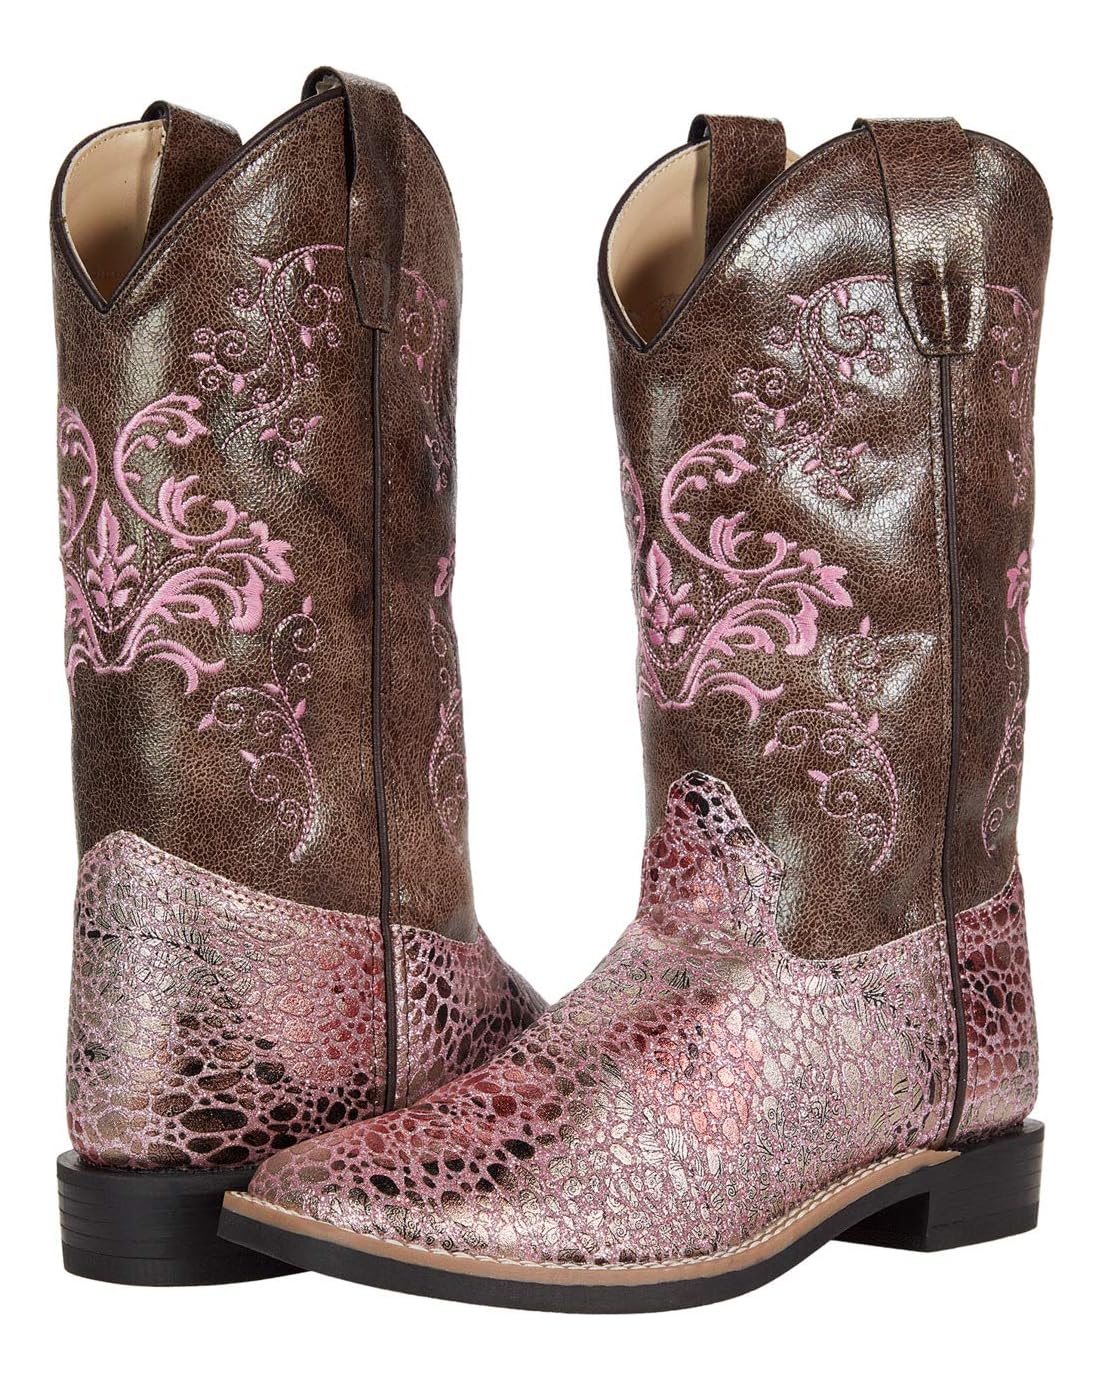 Old West Kids Boots Antique Pink (Big Kid)